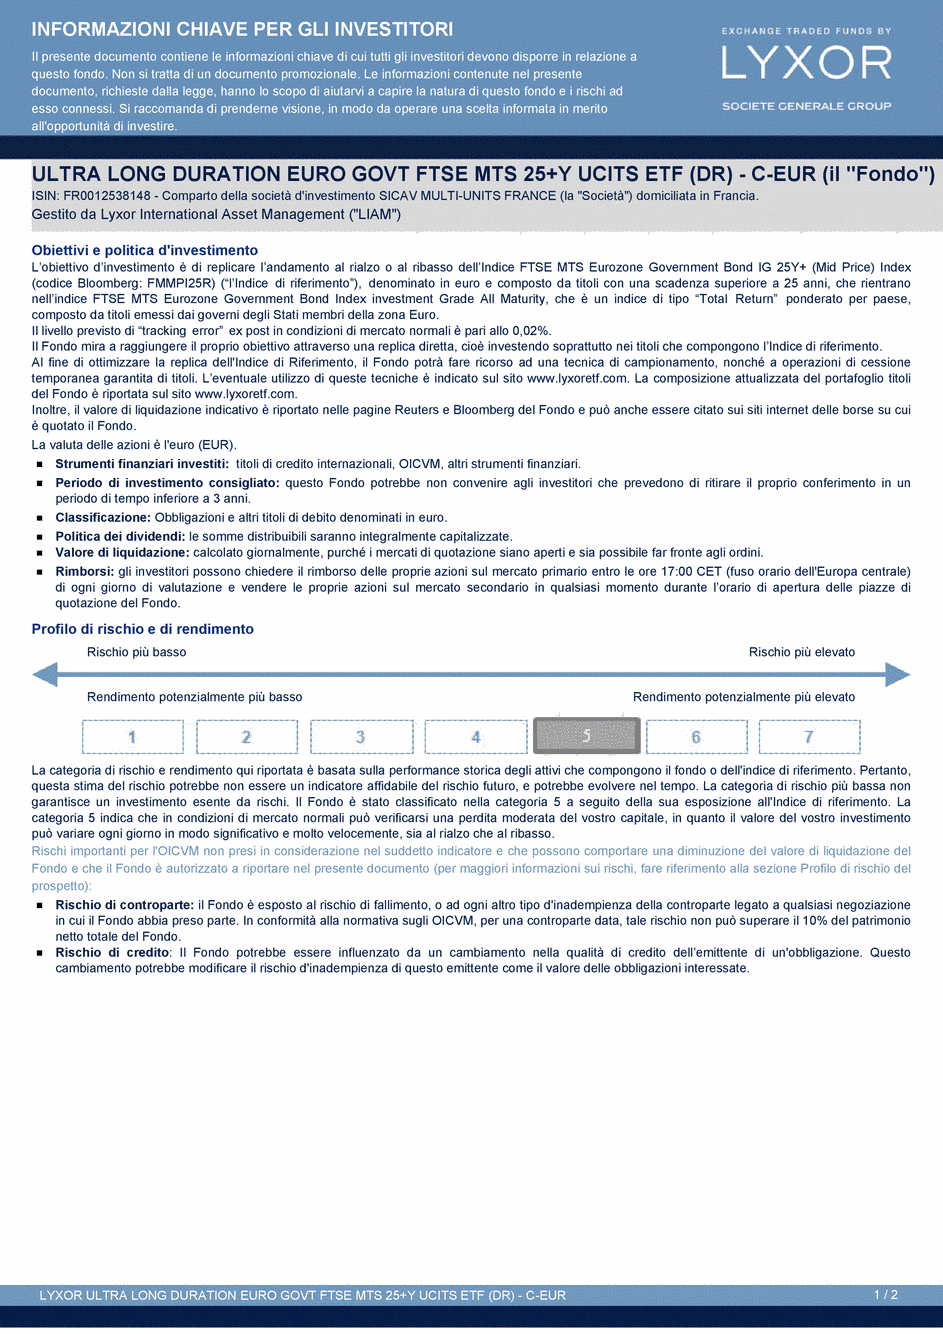 DICI LYXOR ULTRA LONG DURATION EURO GOVT FTSE MTS 25+Y (DR) UCITS ETF - C-EUR - 26/03/2015 - Italien